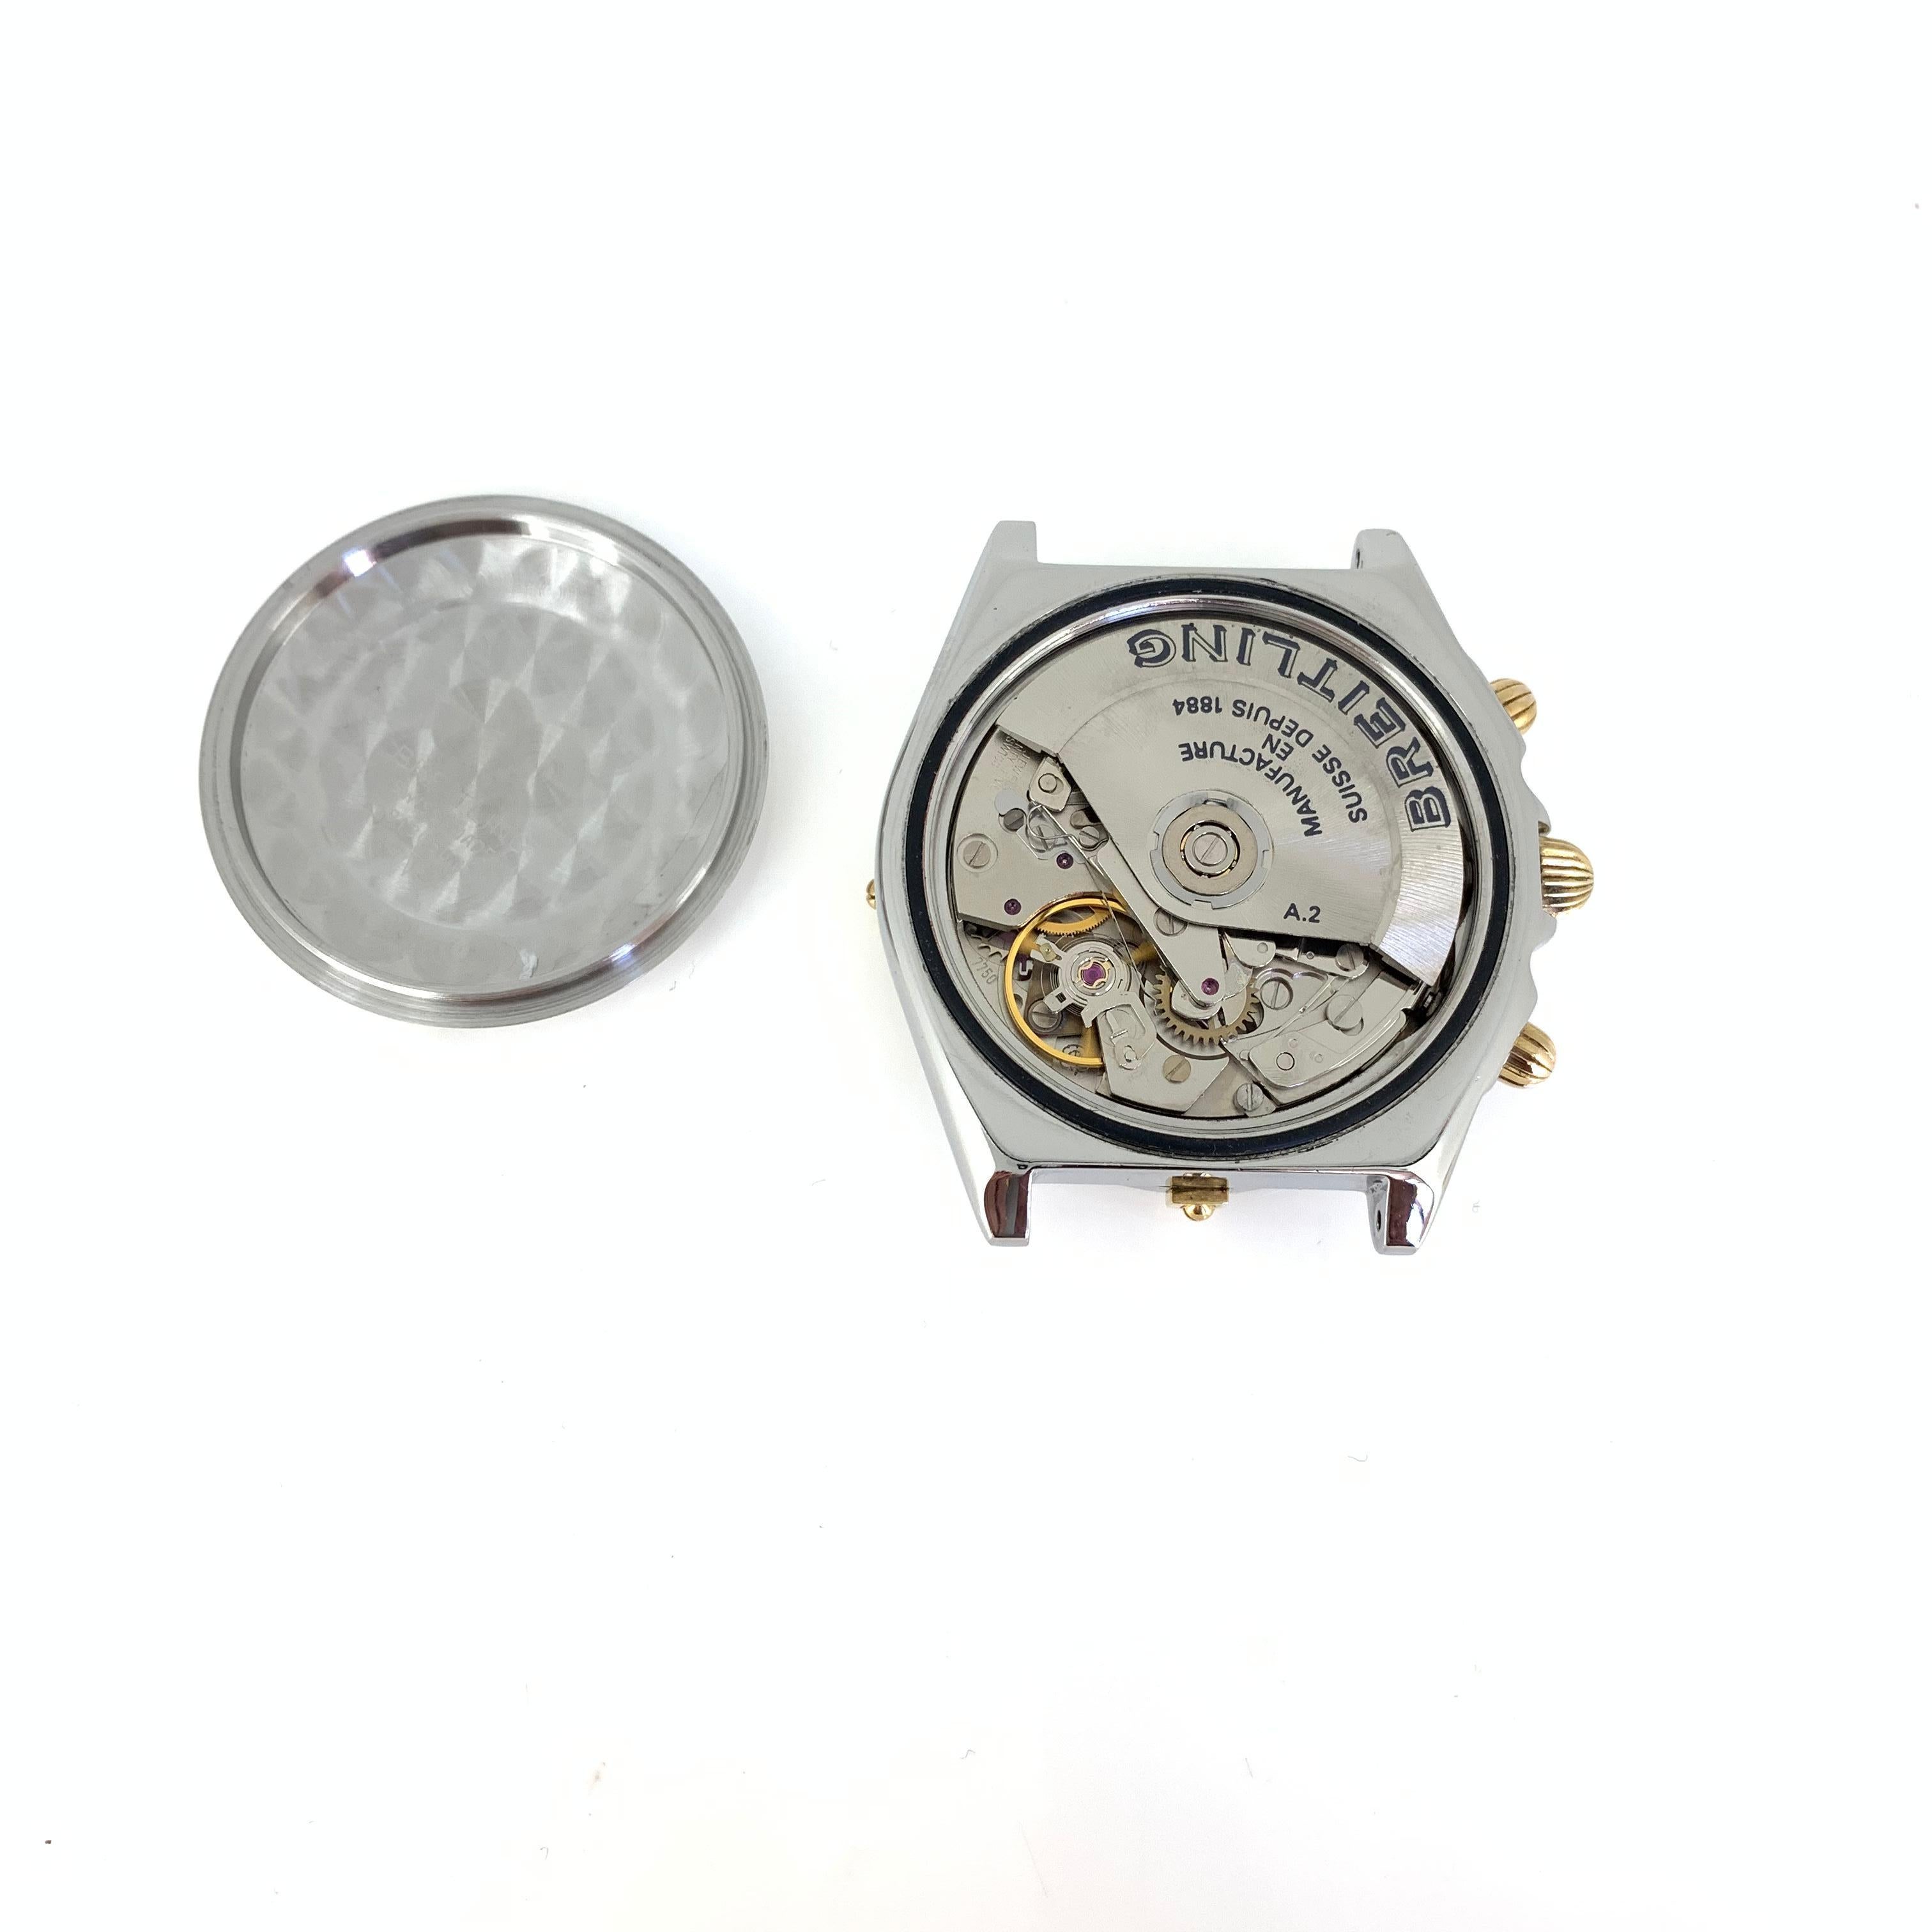 Certified Breitling Chronomat B13050 Yellow Gold Stainless Steel Diamonds Watch 1